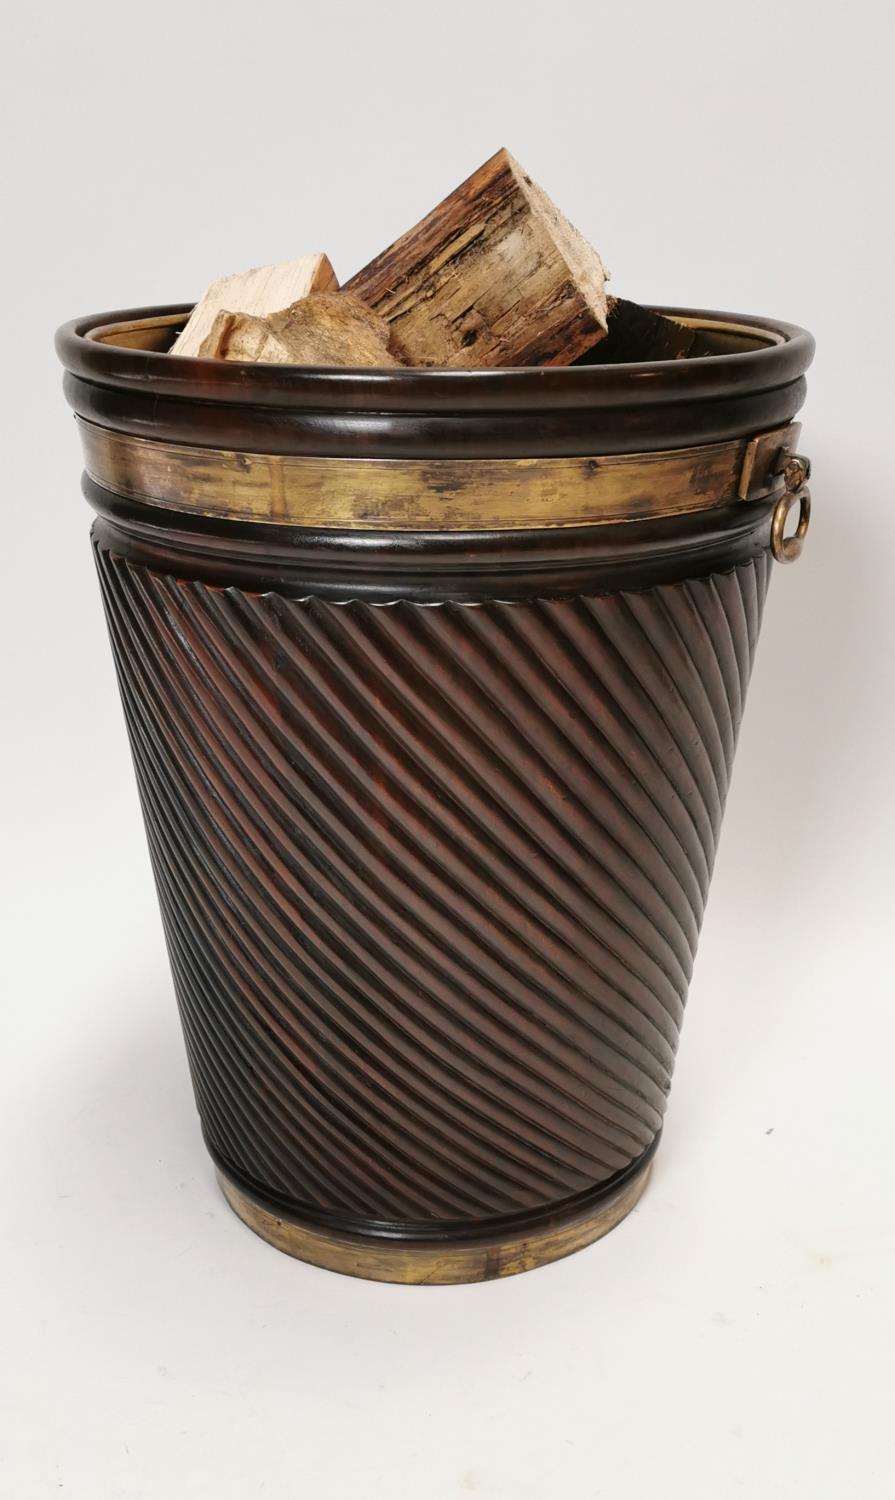 Mahogany brass bound peat bucket.